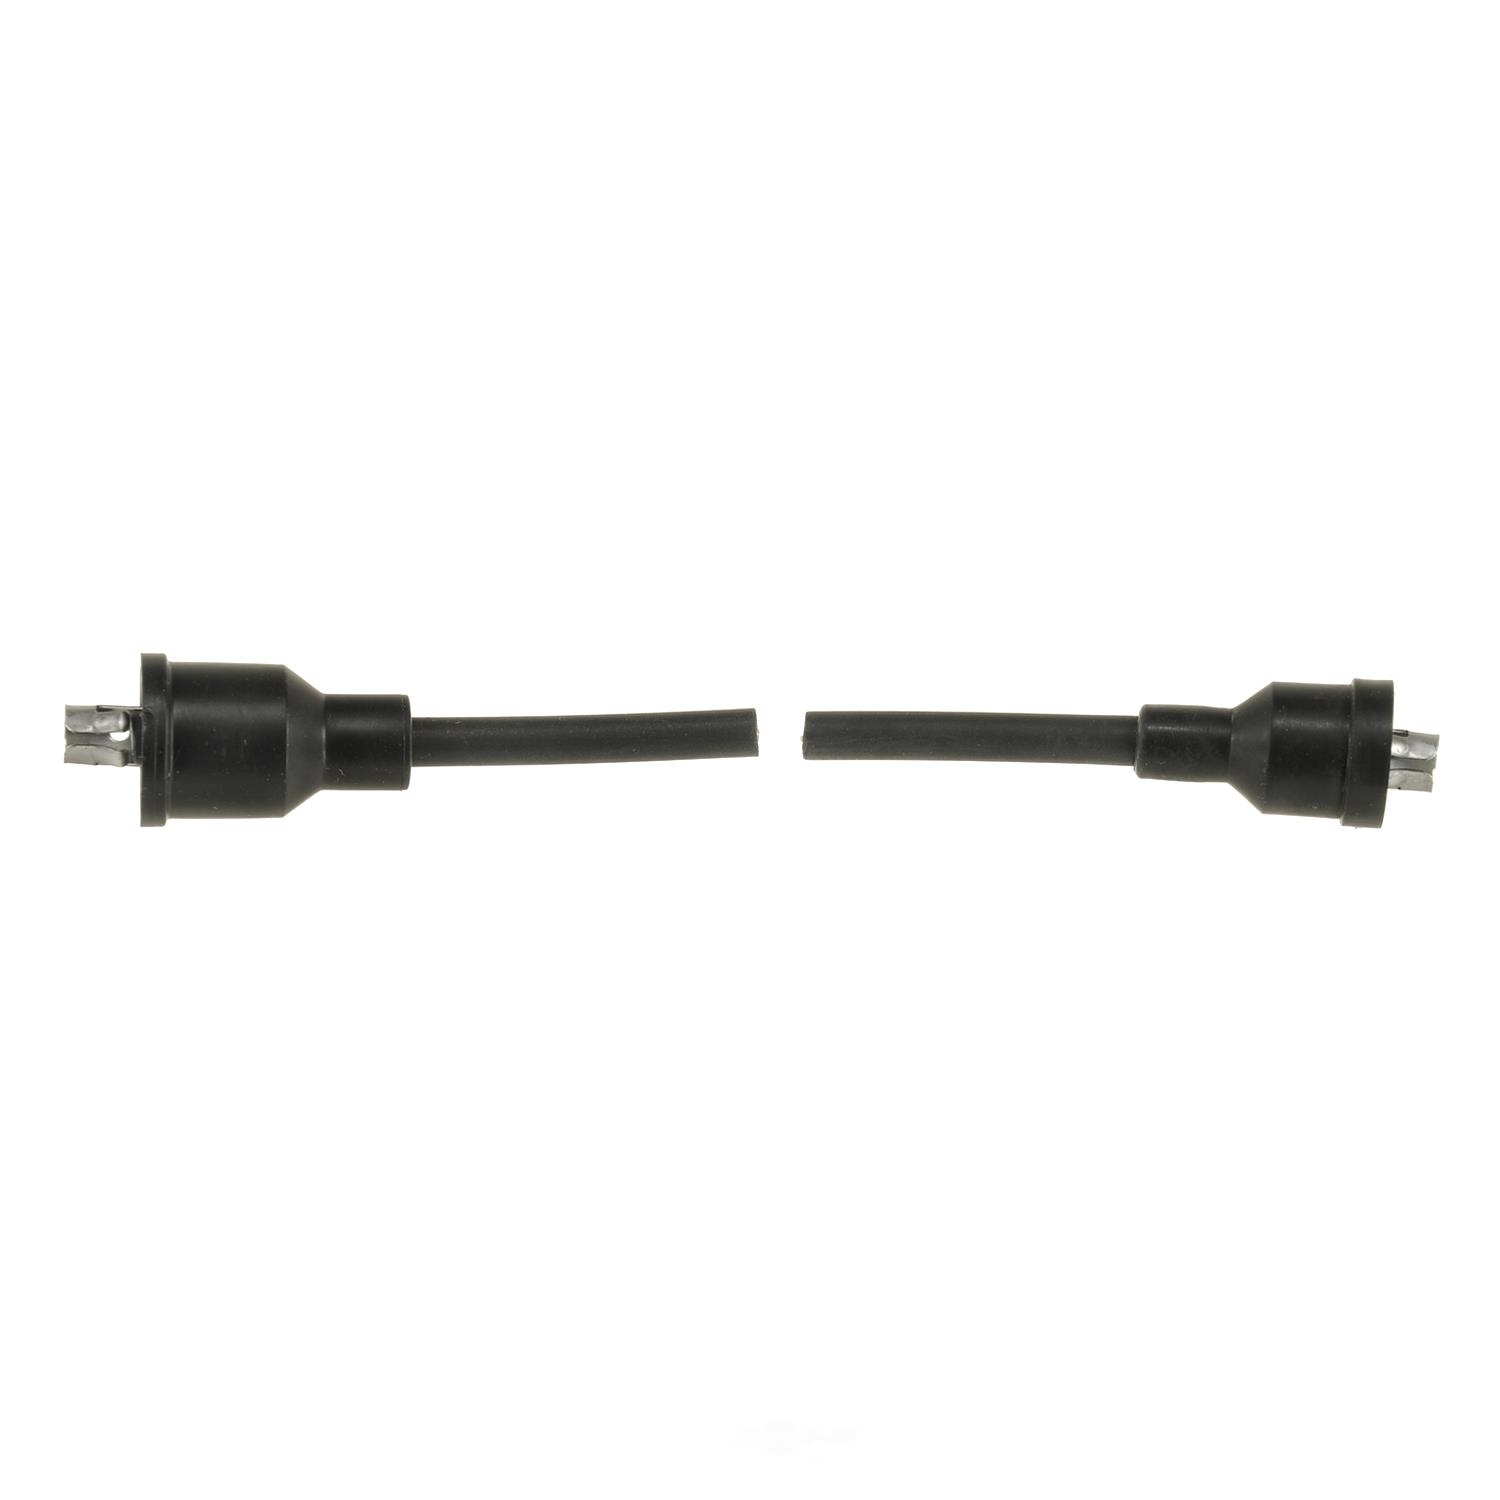 FEDERAL PARTS CORP. - Spark Plug Wire Set - FPC 7733